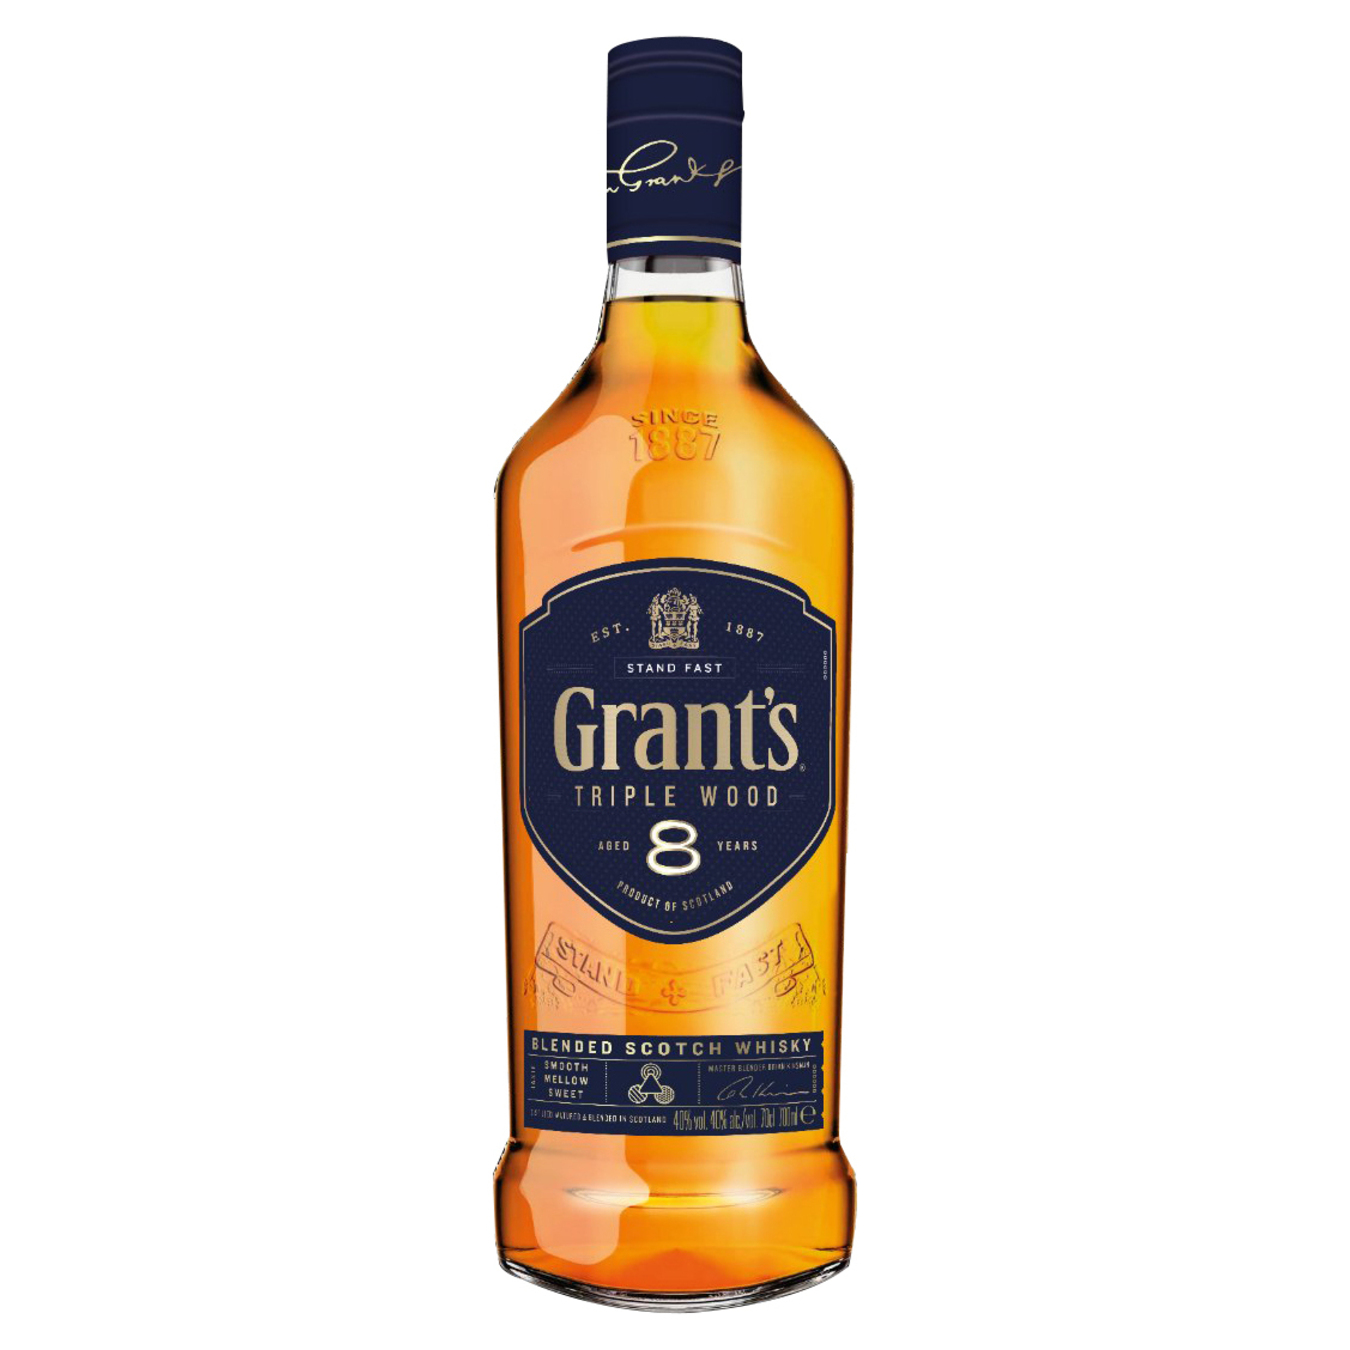 Виски Grant's 8 лет 40% 0,7л